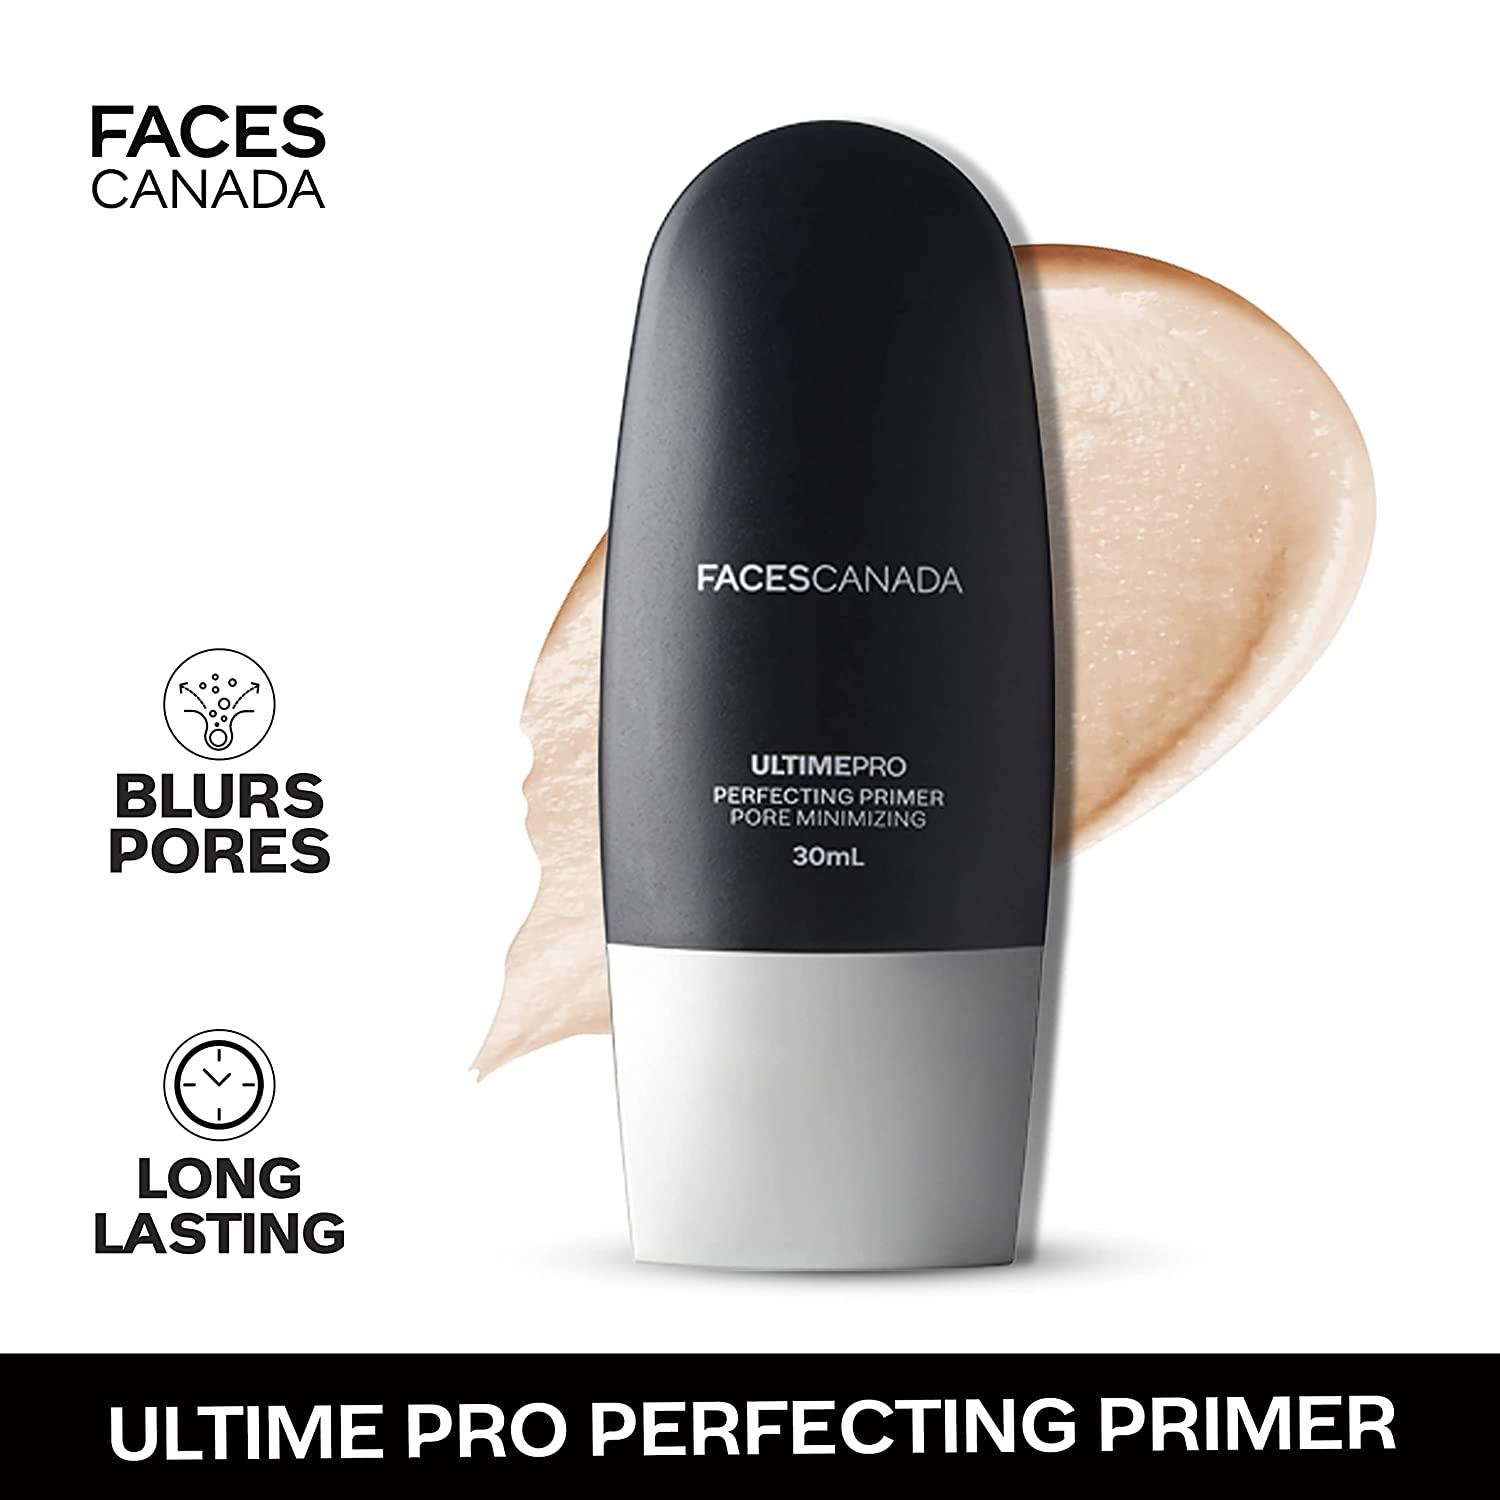 Faces Canada | Faces Canada Ultime Pro Perfecting Primer, Lightweight Pore Minimizing Face Primer (30 ml)